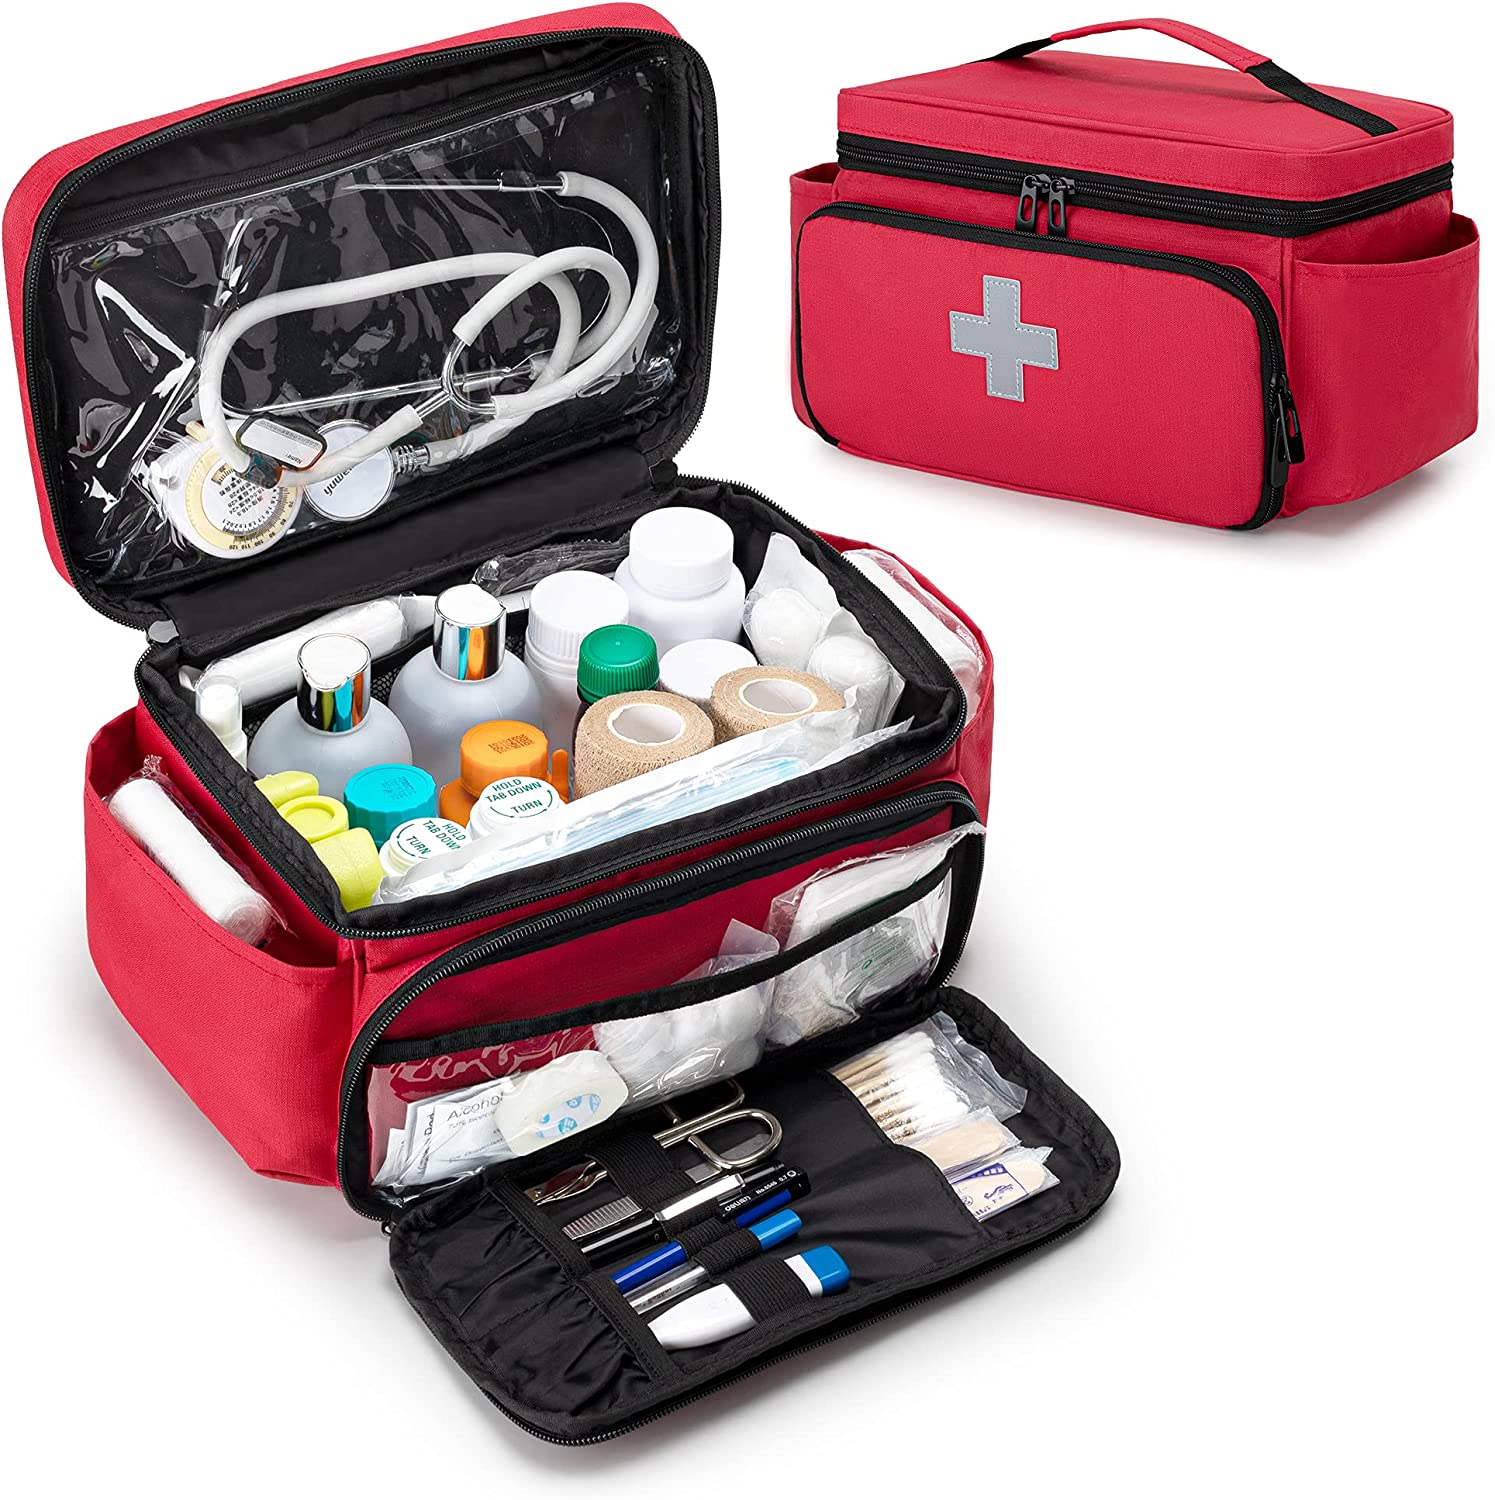  Chnrong Medicine Box Organizer Storage Box First Aid